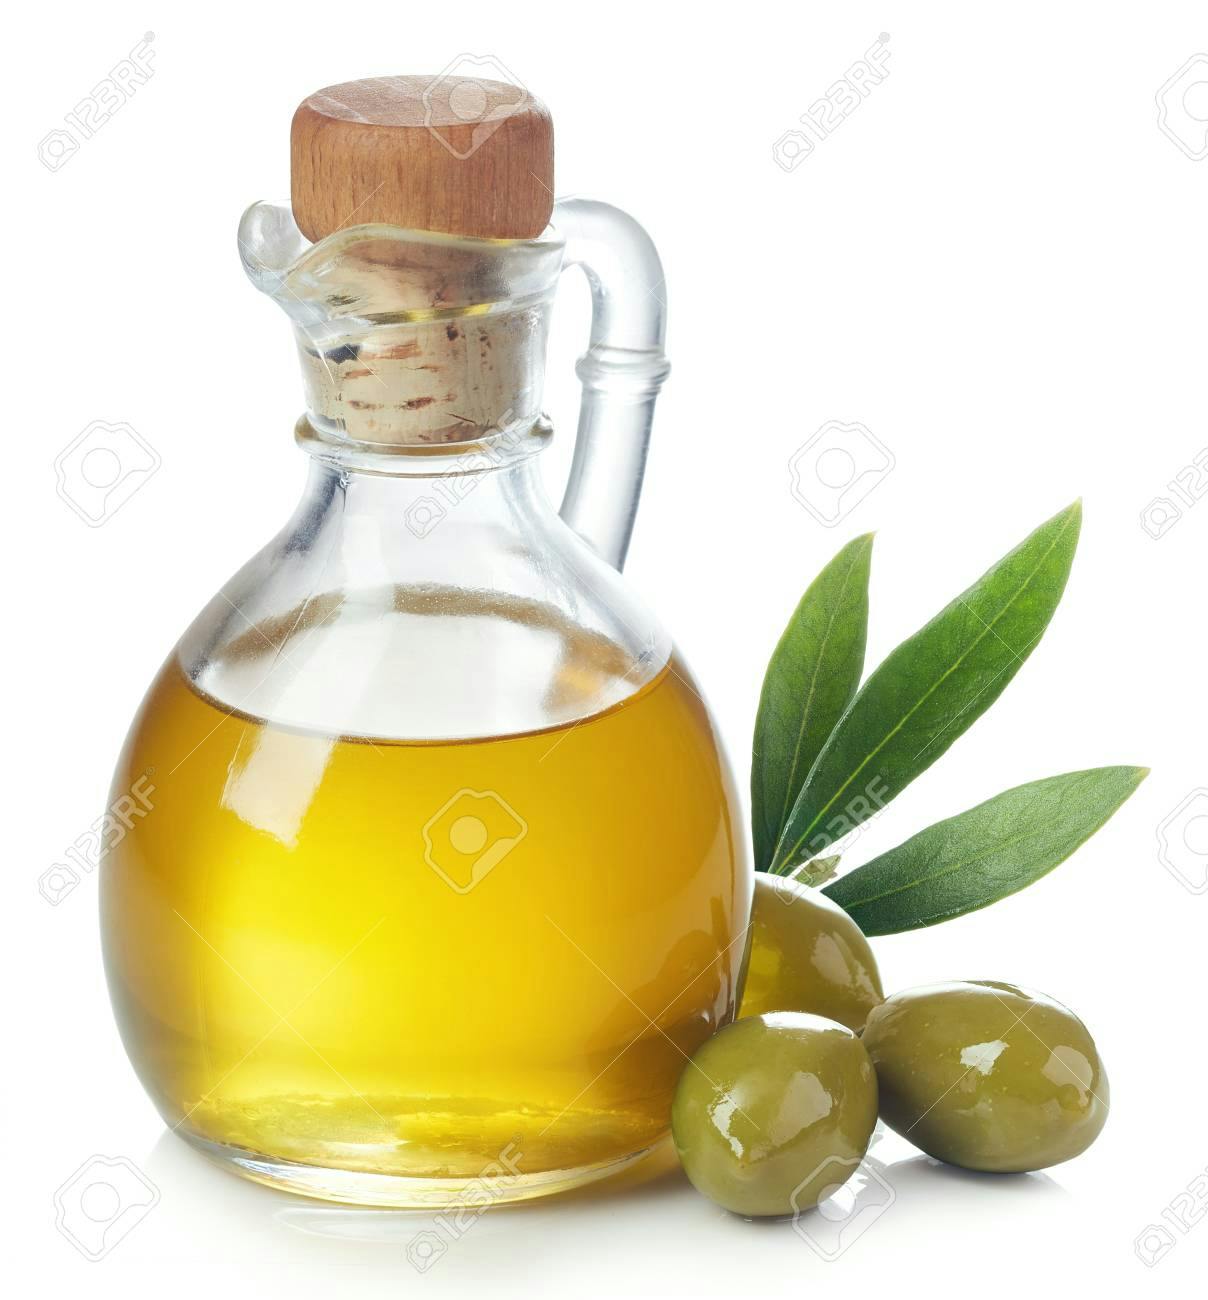 extra virgin olive oil to taste